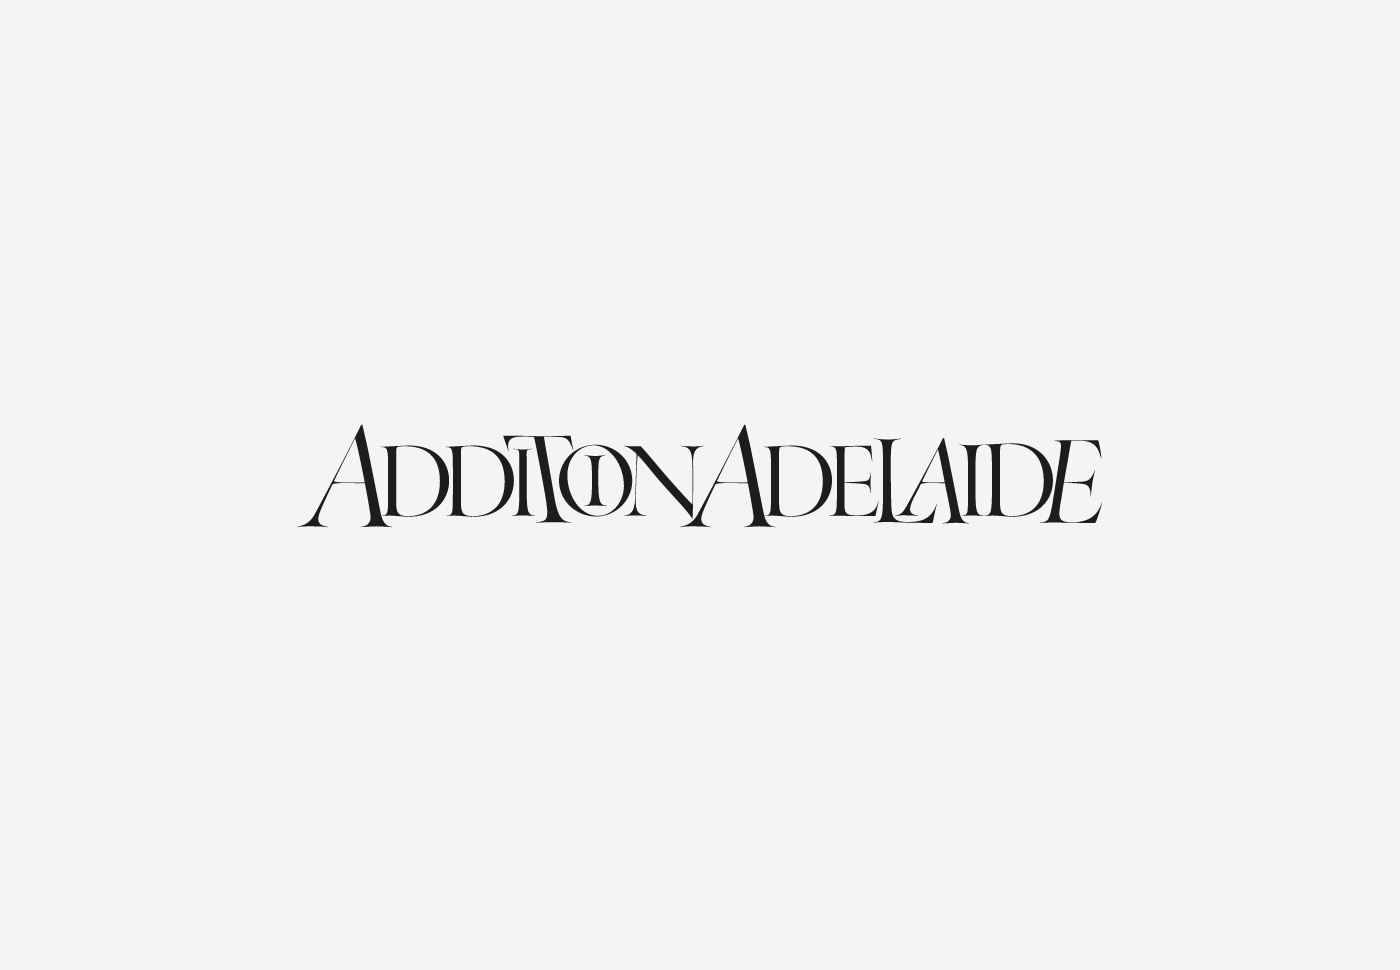 Addition Adelaide Tokyo – Logo